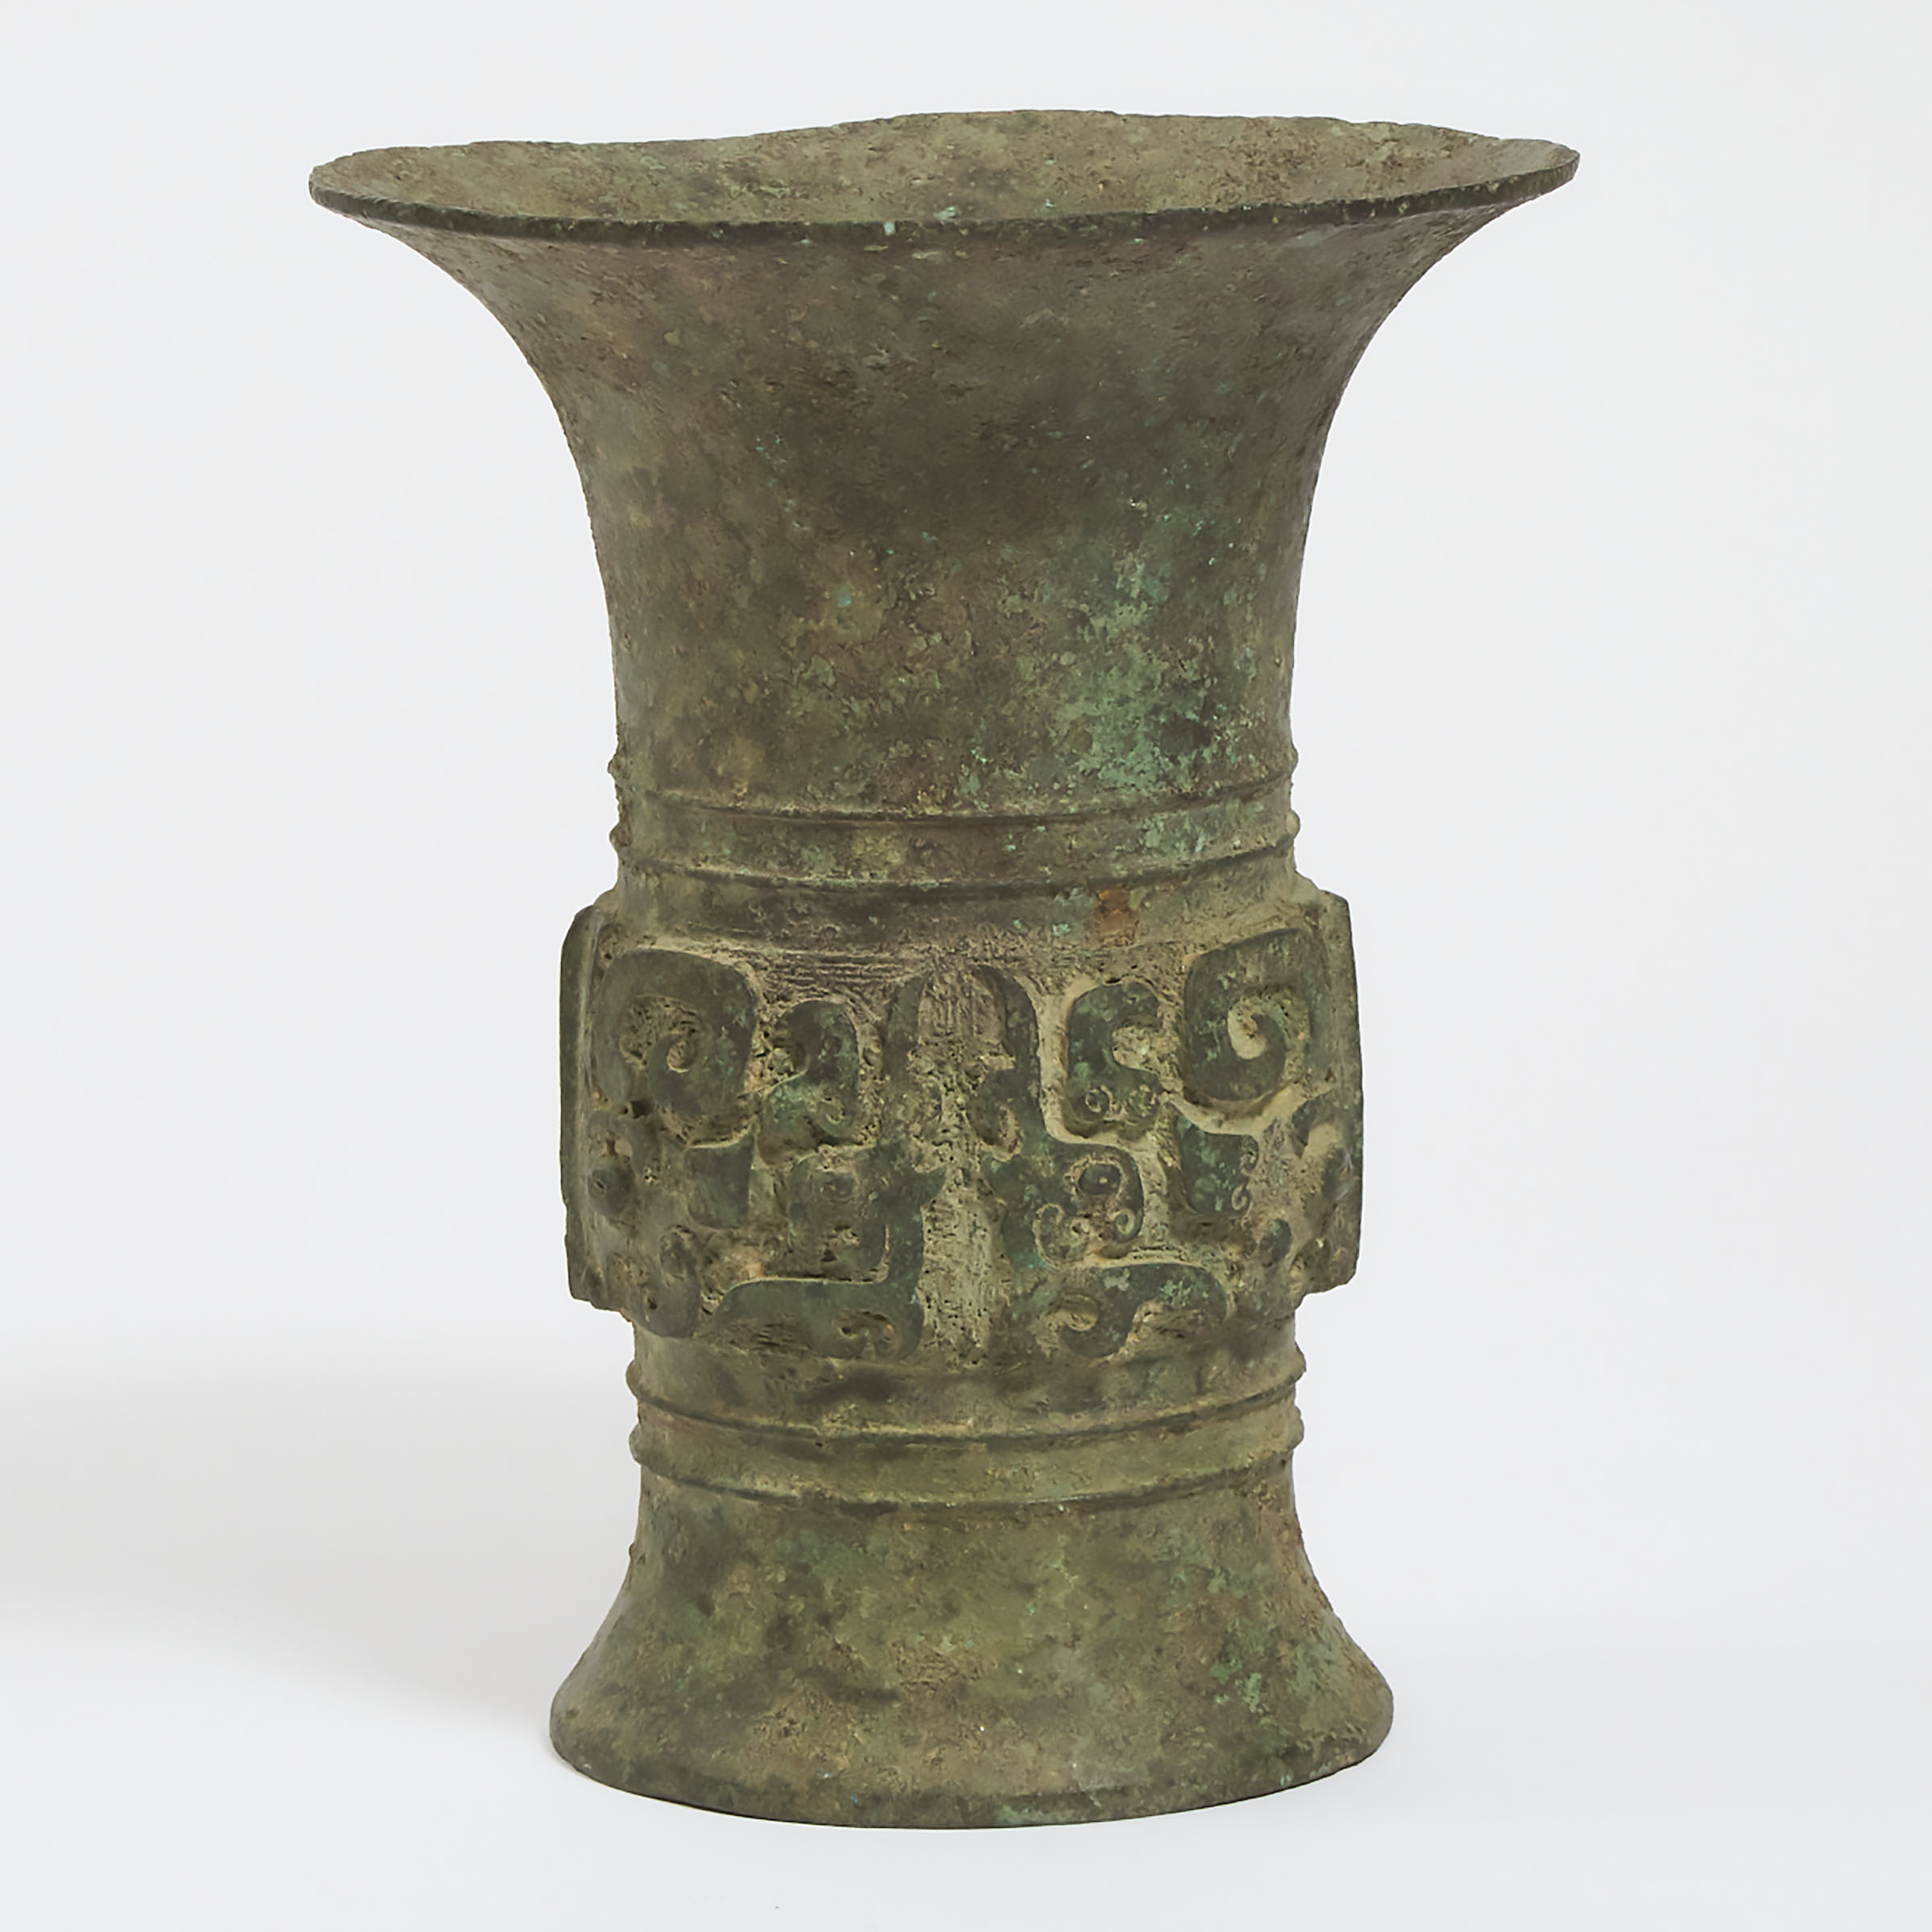 A Bronze Ritual Wine Vessel, Gu, Late Qing Dynasty, Early 20th Century